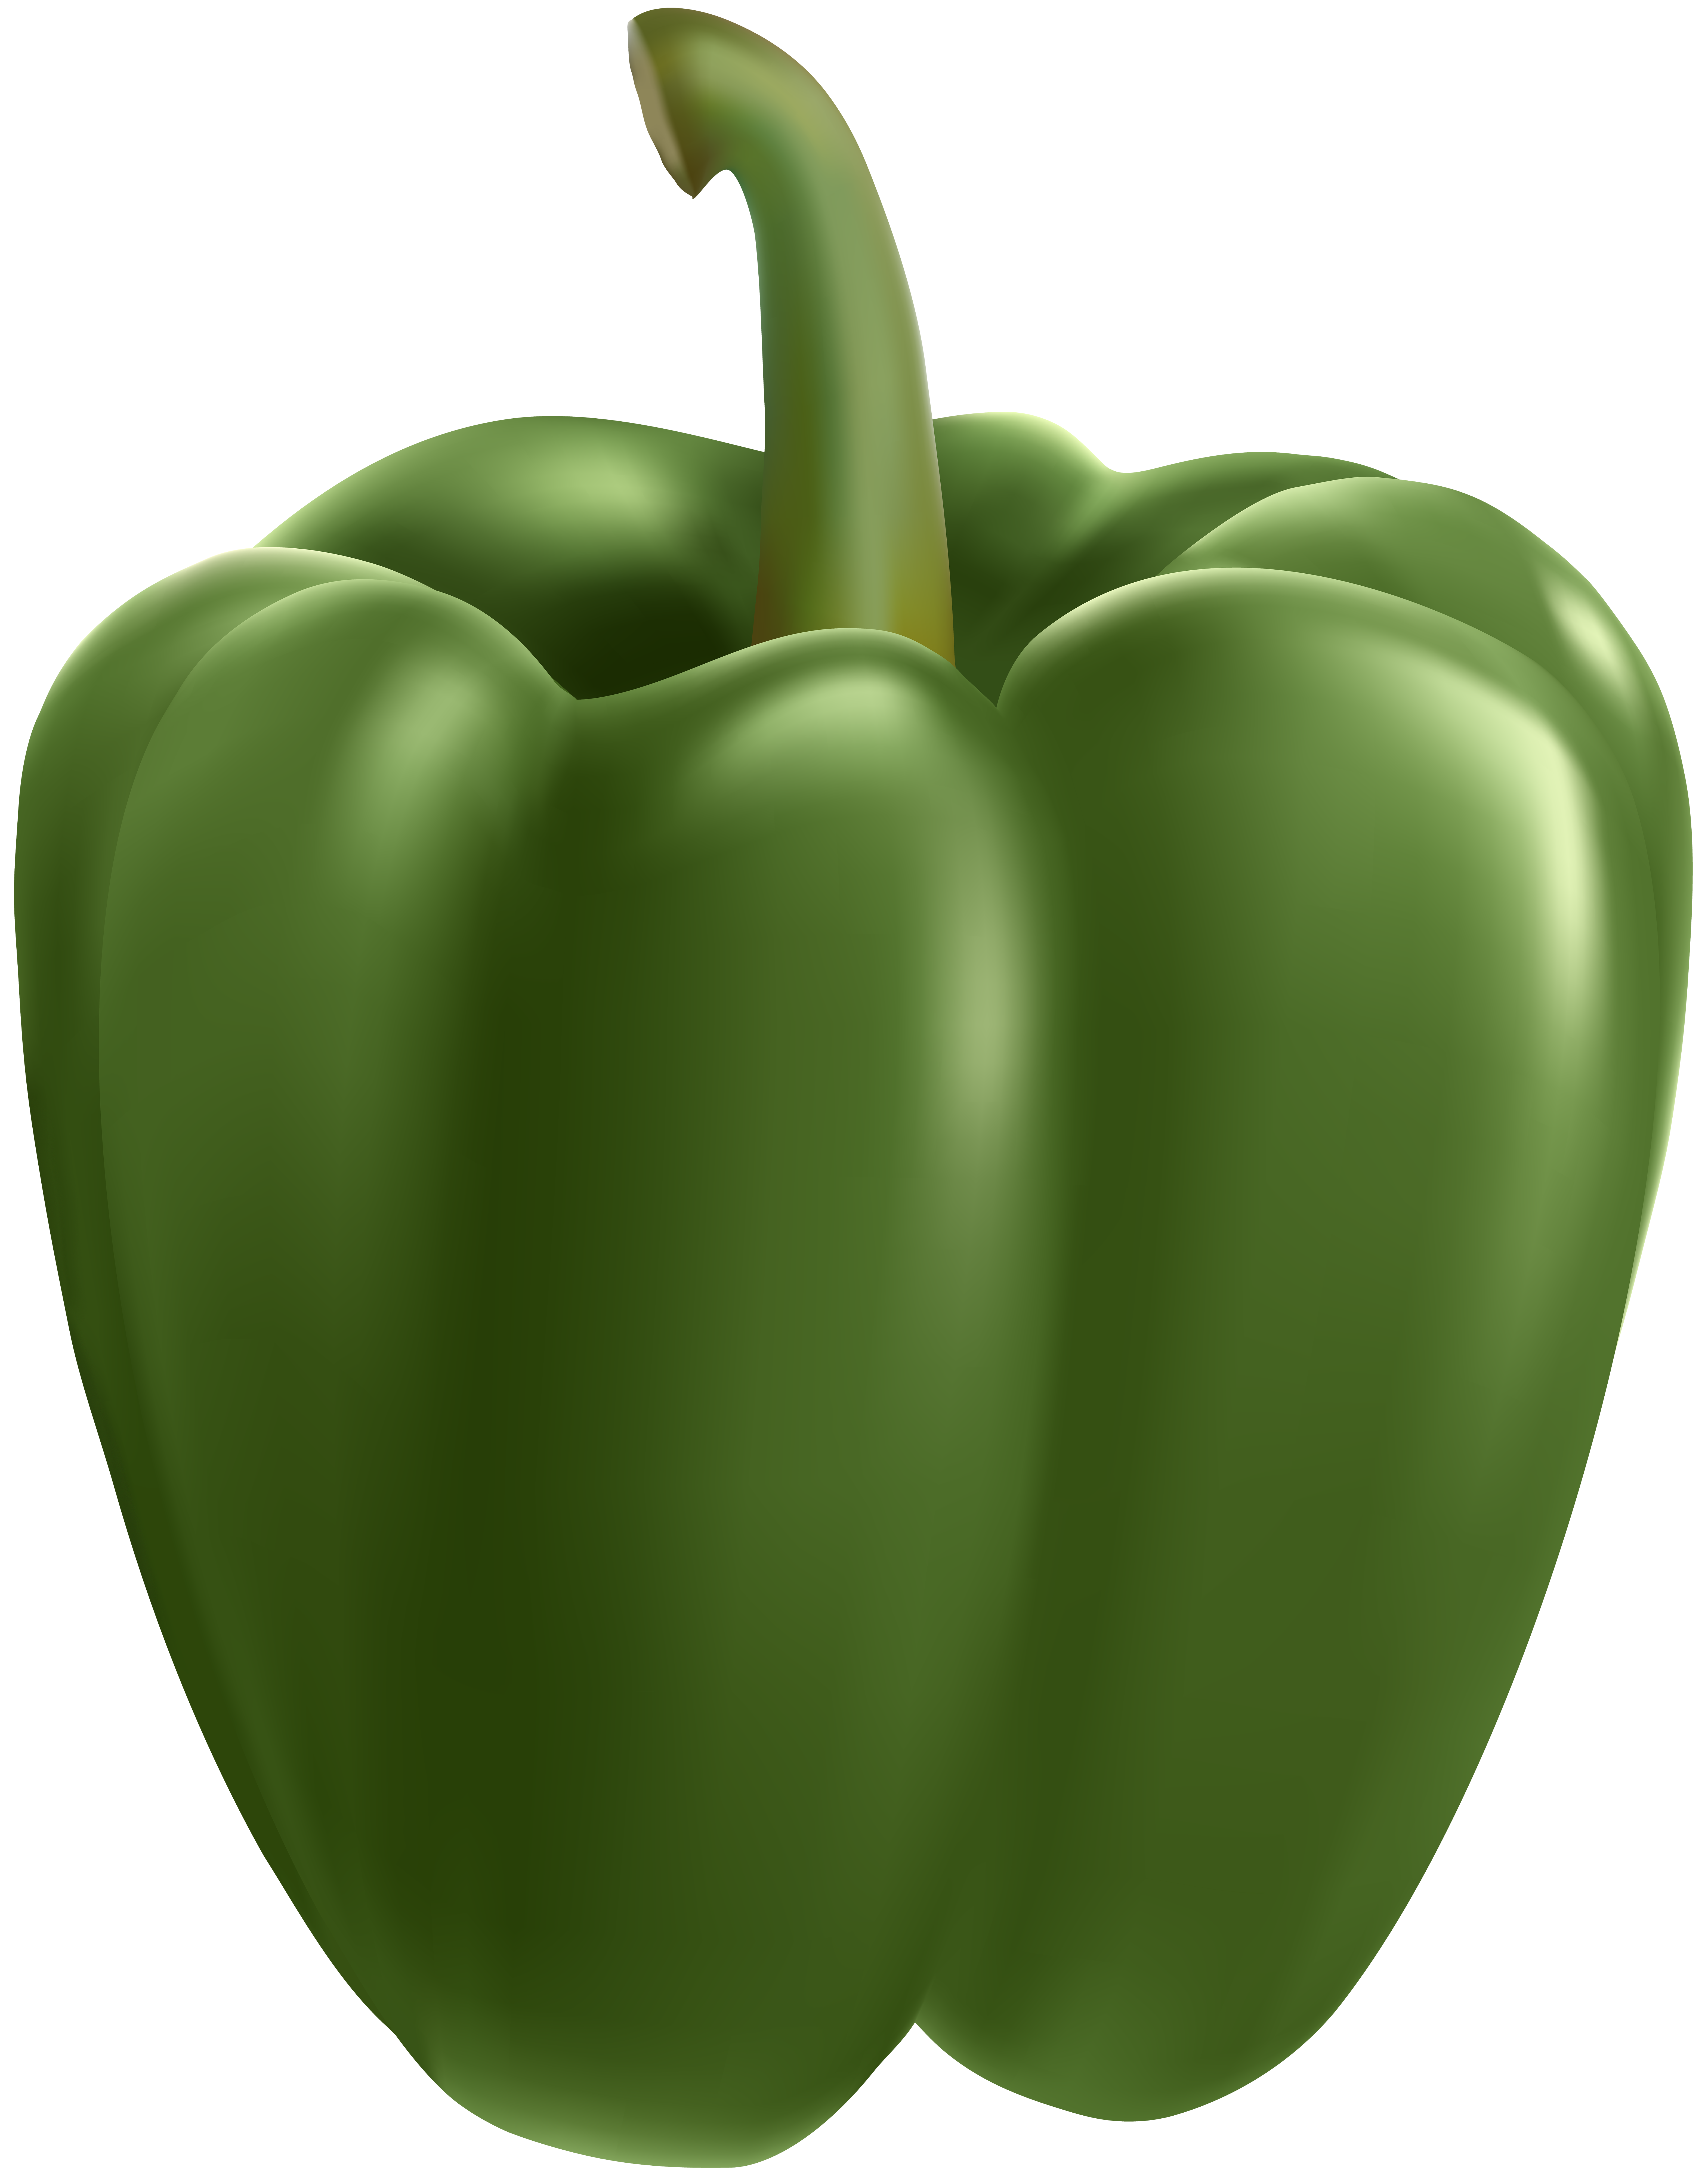 Green Bell Pepper Transparent Clip Art Image | Gallery 